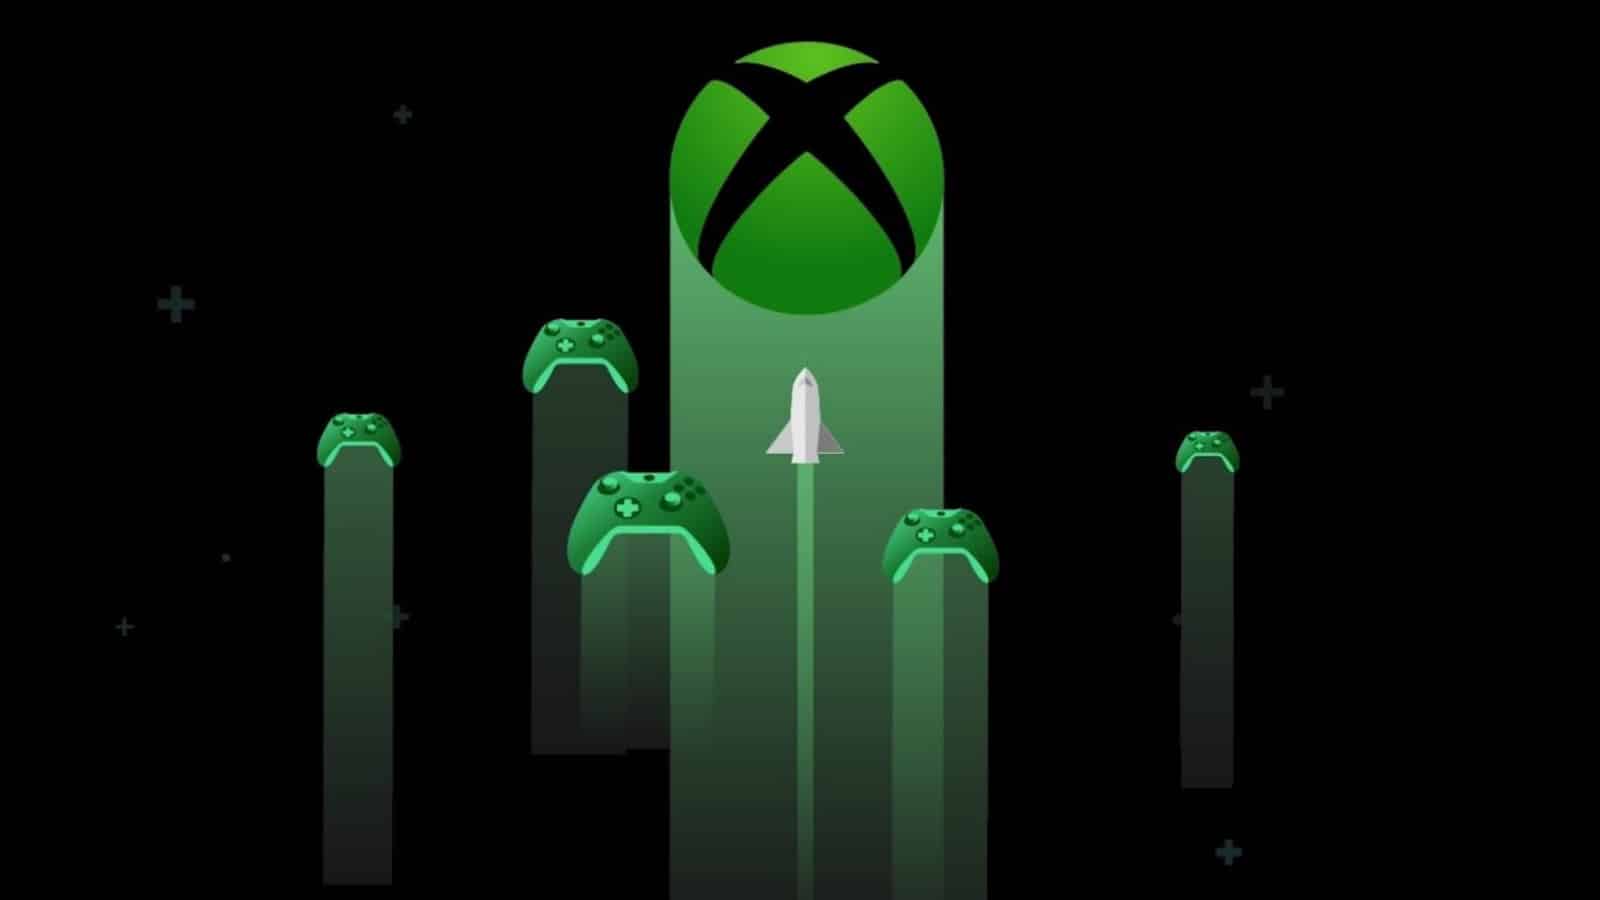 Microsoft Finally Brings 'Fortnite' to Mobile Through Xbox Cloud